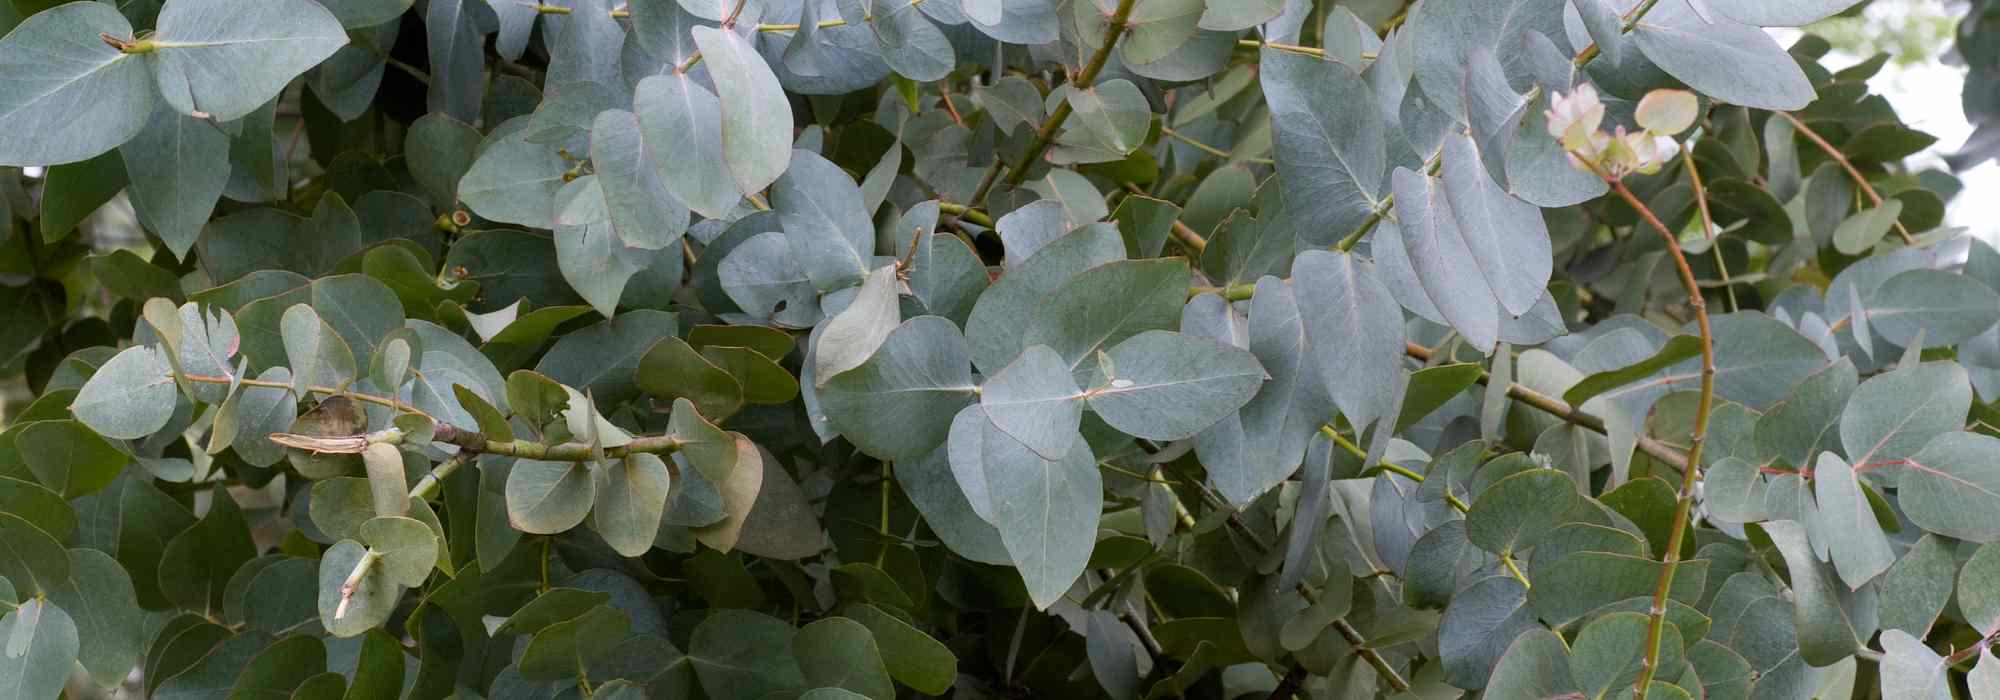 Feuille d'eucalyptus séchée 